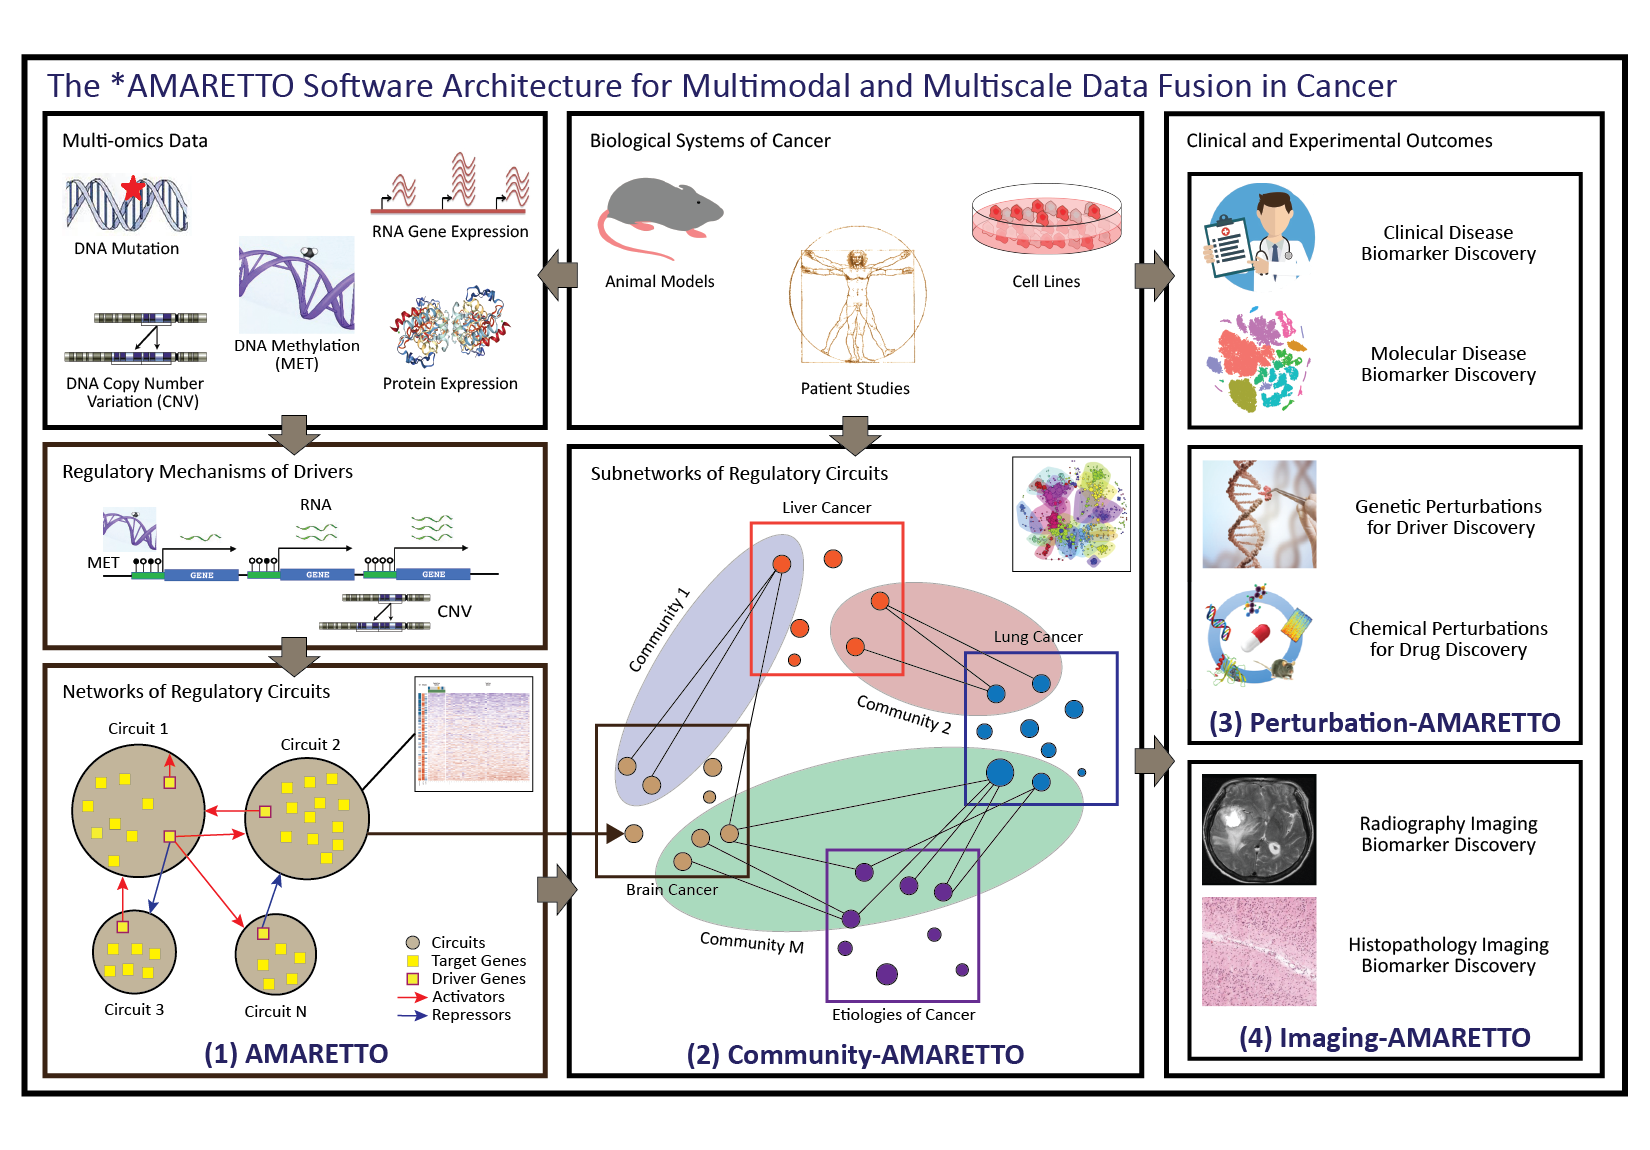 The *AMARETTO Software Architecture for Multimodal and Multiscale Data Fusion in Cancer diagram